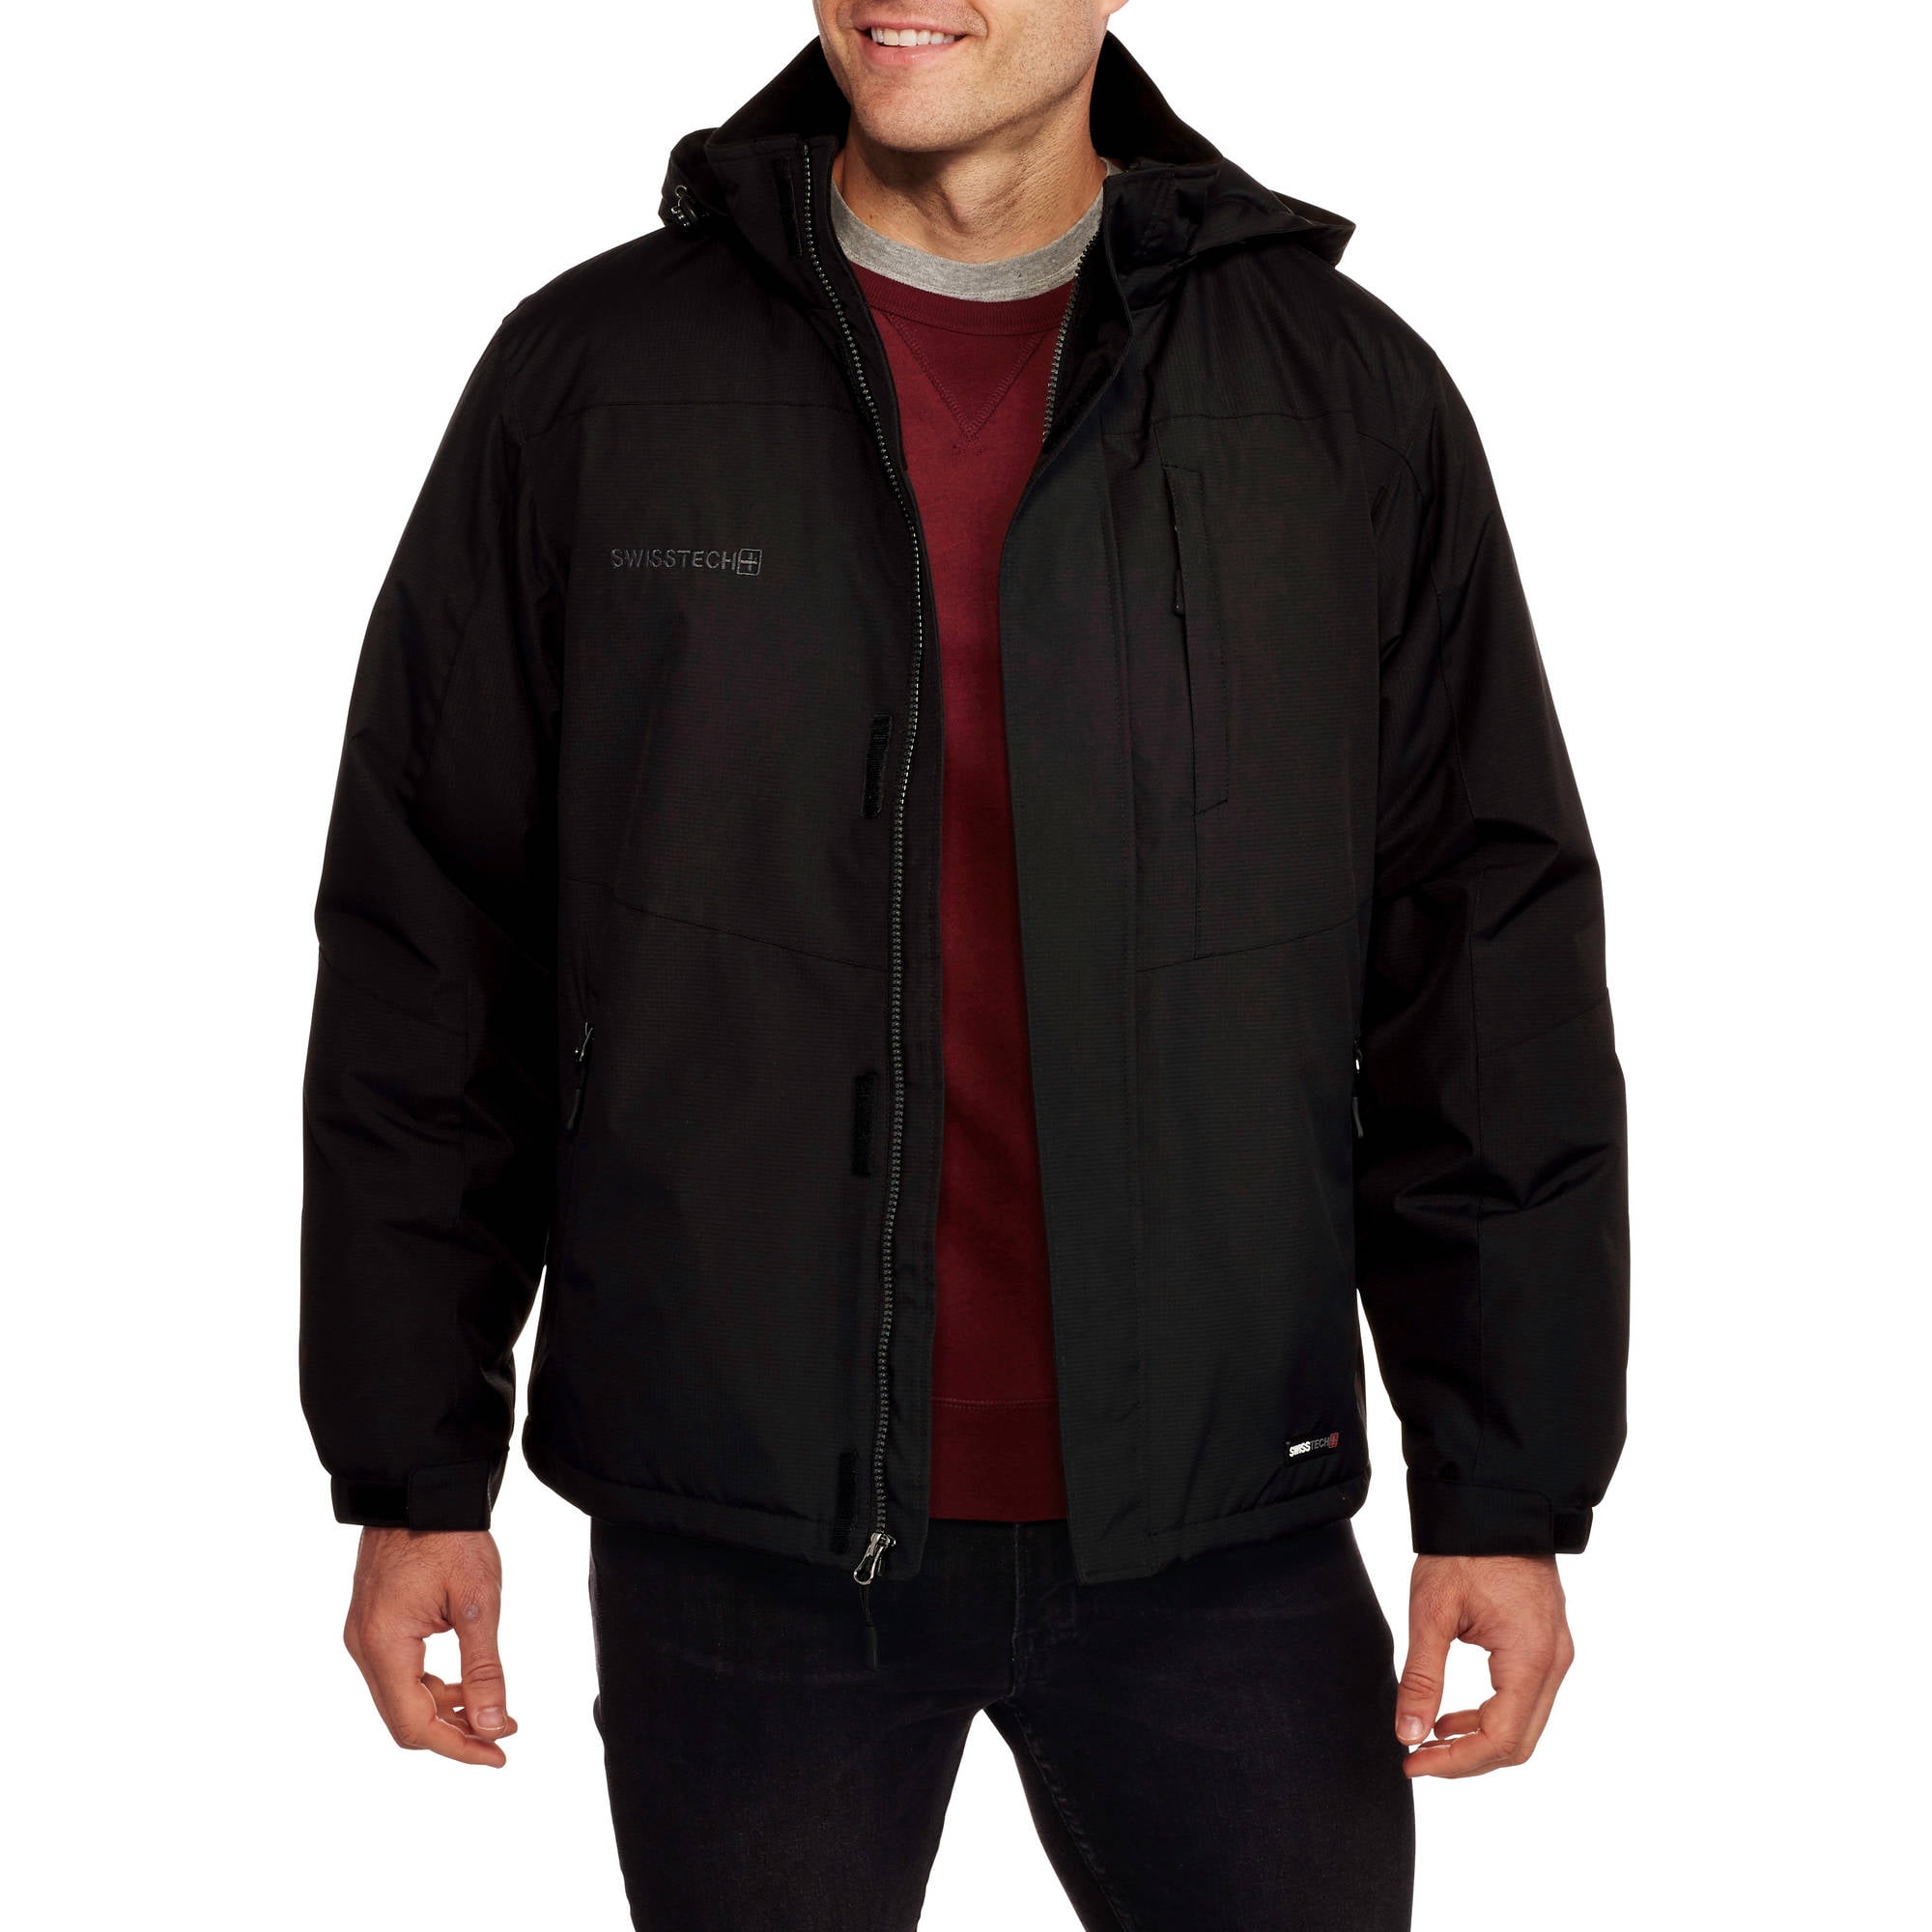 Clear Rain Jacket With Hood - Womens Sizes - Walmart.com